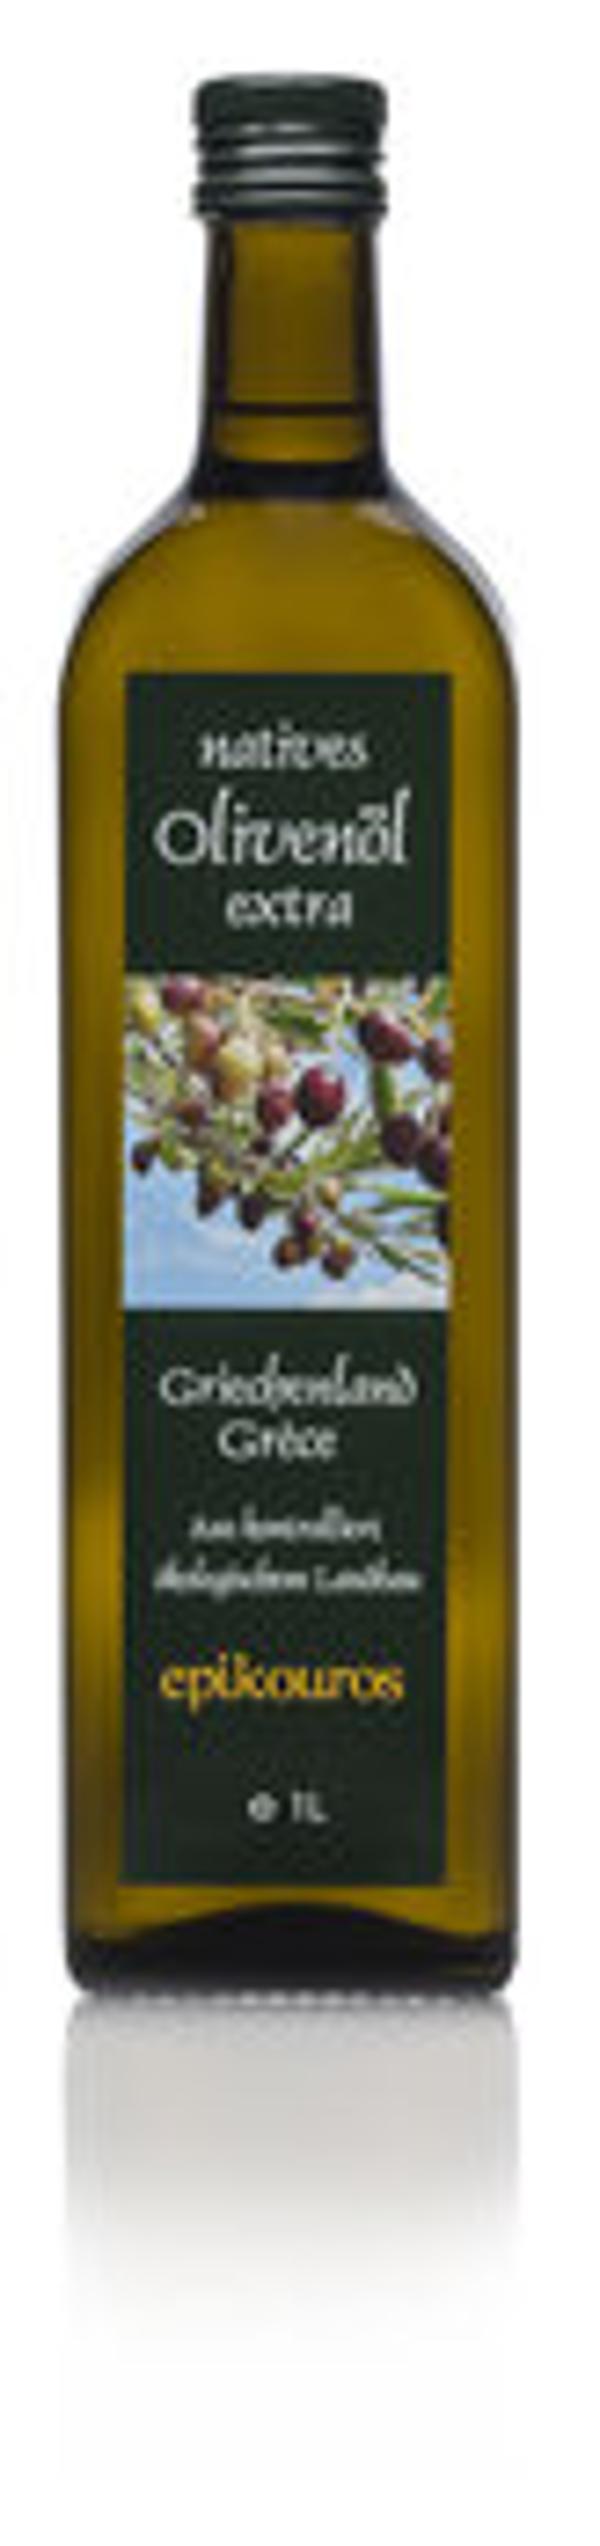 Produktfoto zu Natives Olivenöl extra 1 Liter